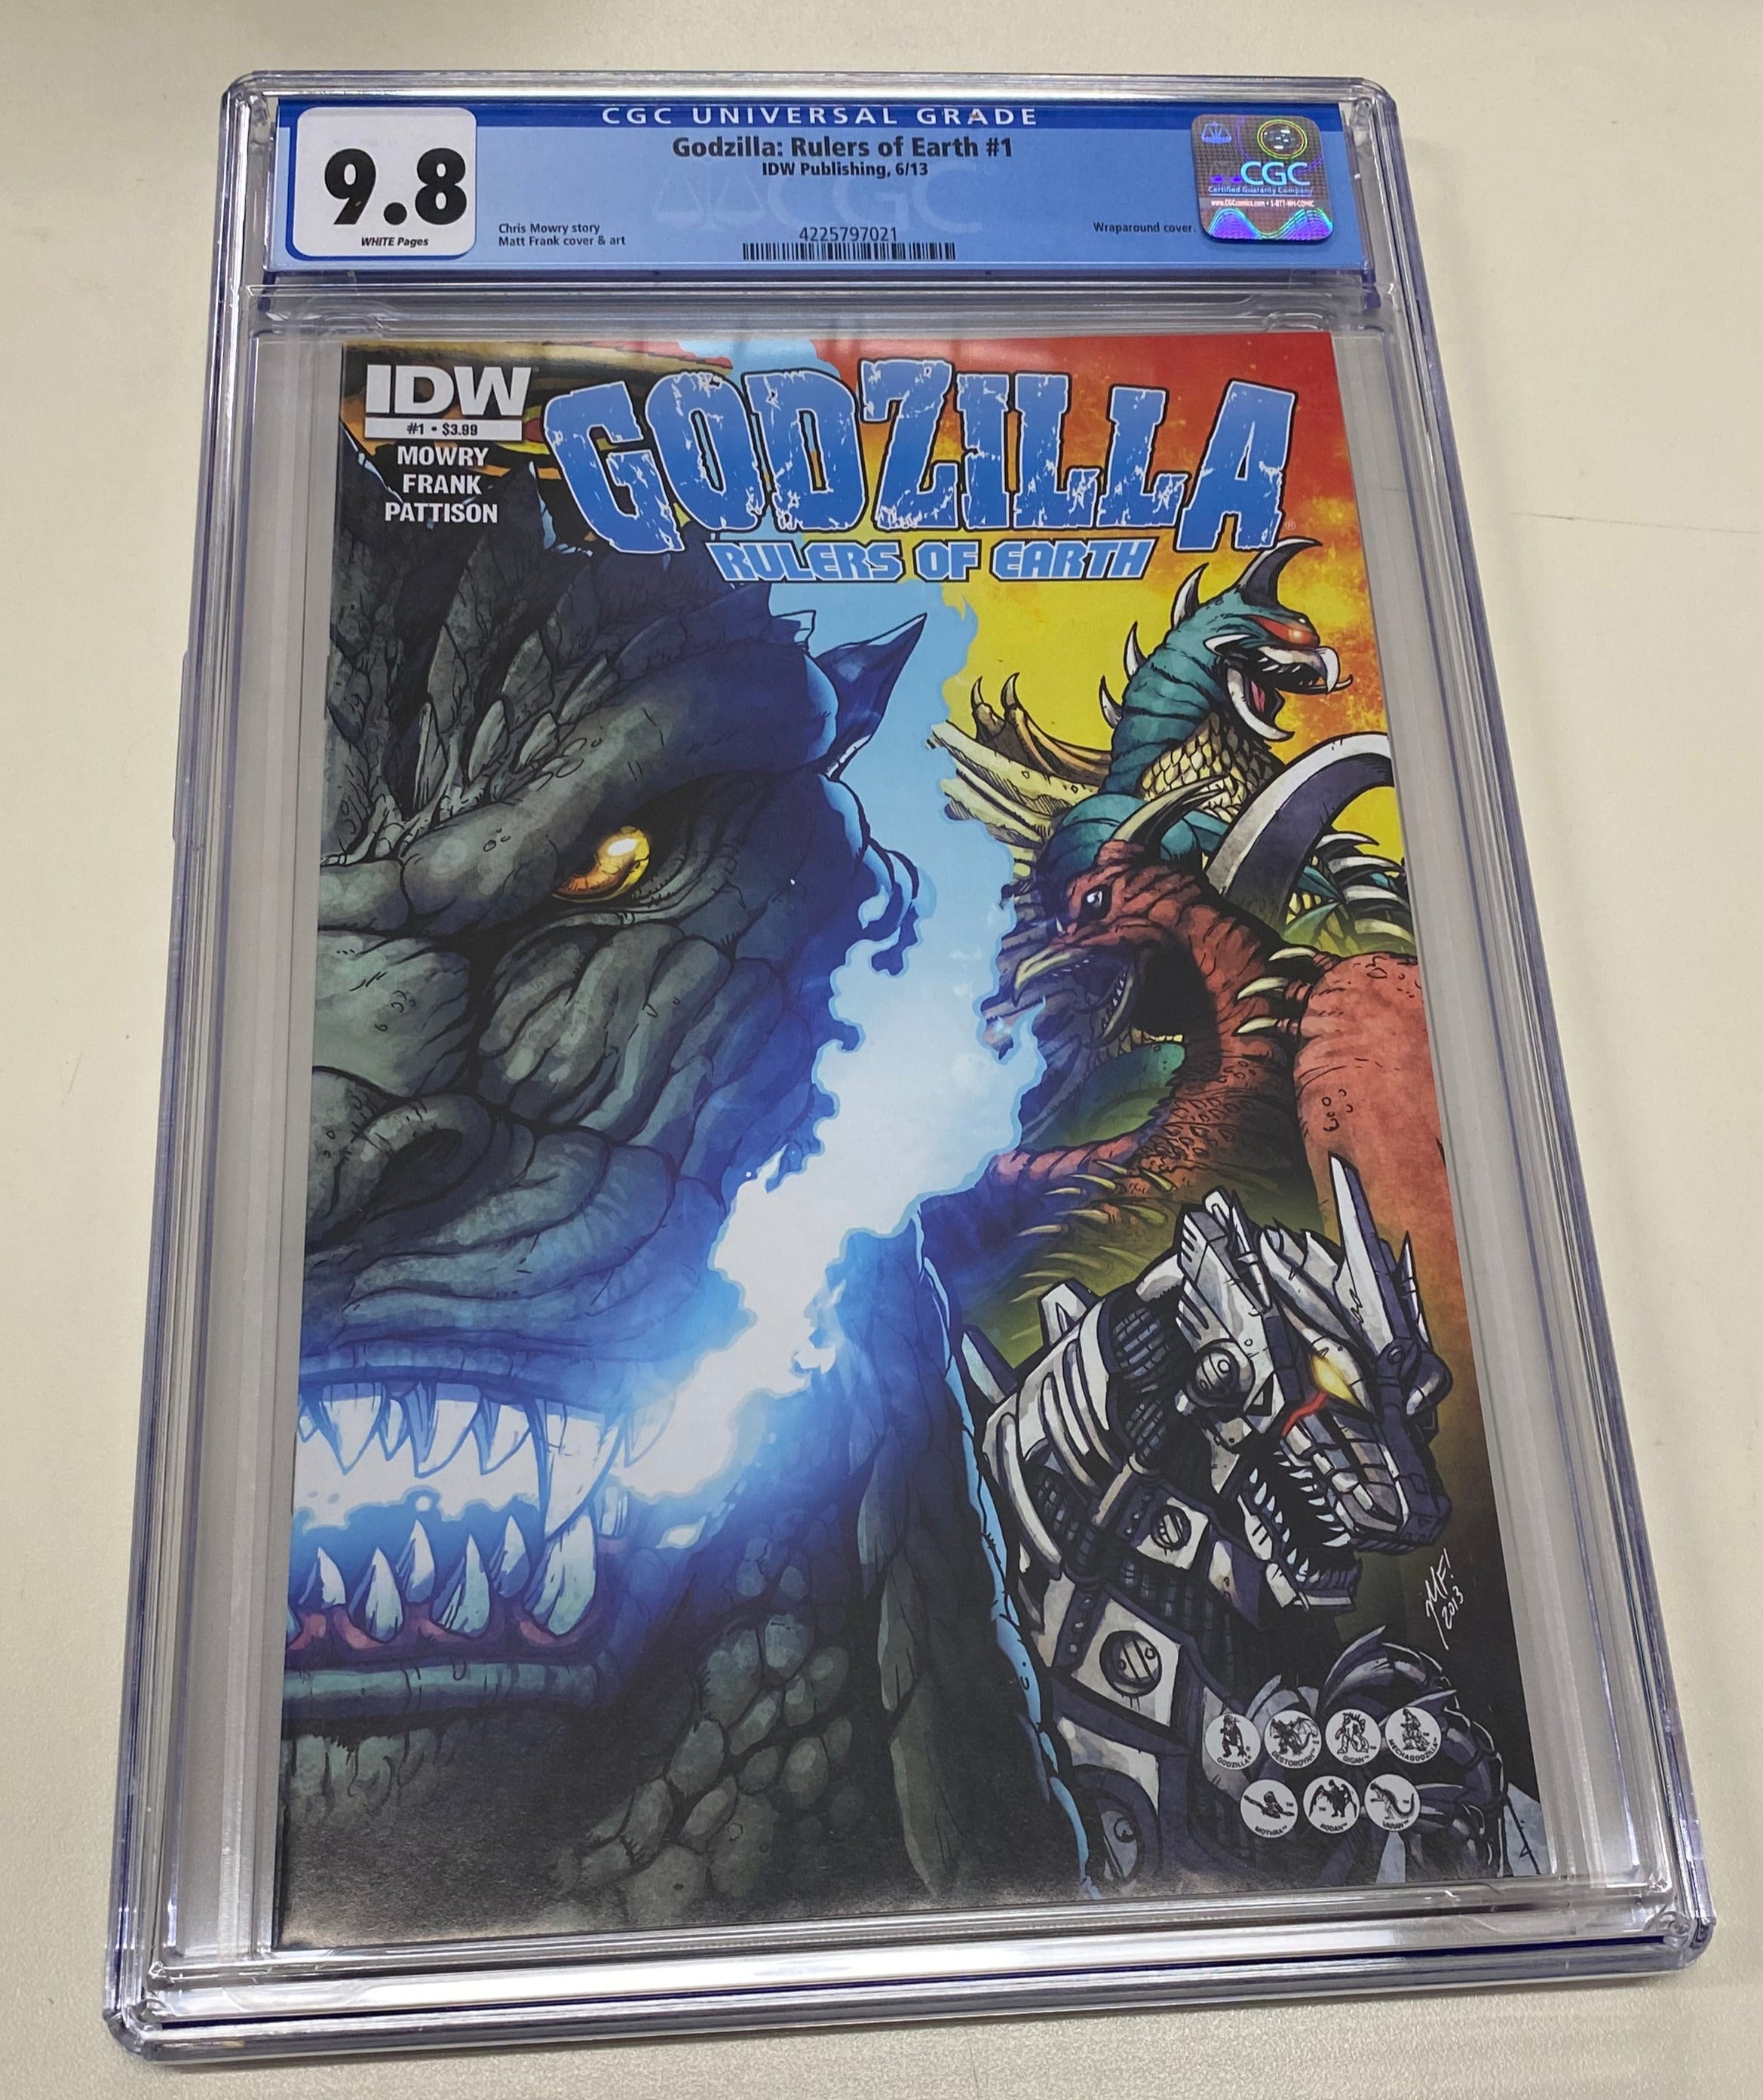 Godzilla Rulers of the Earth #1 CGC 9.8 | L.A. Mood Comics and Games